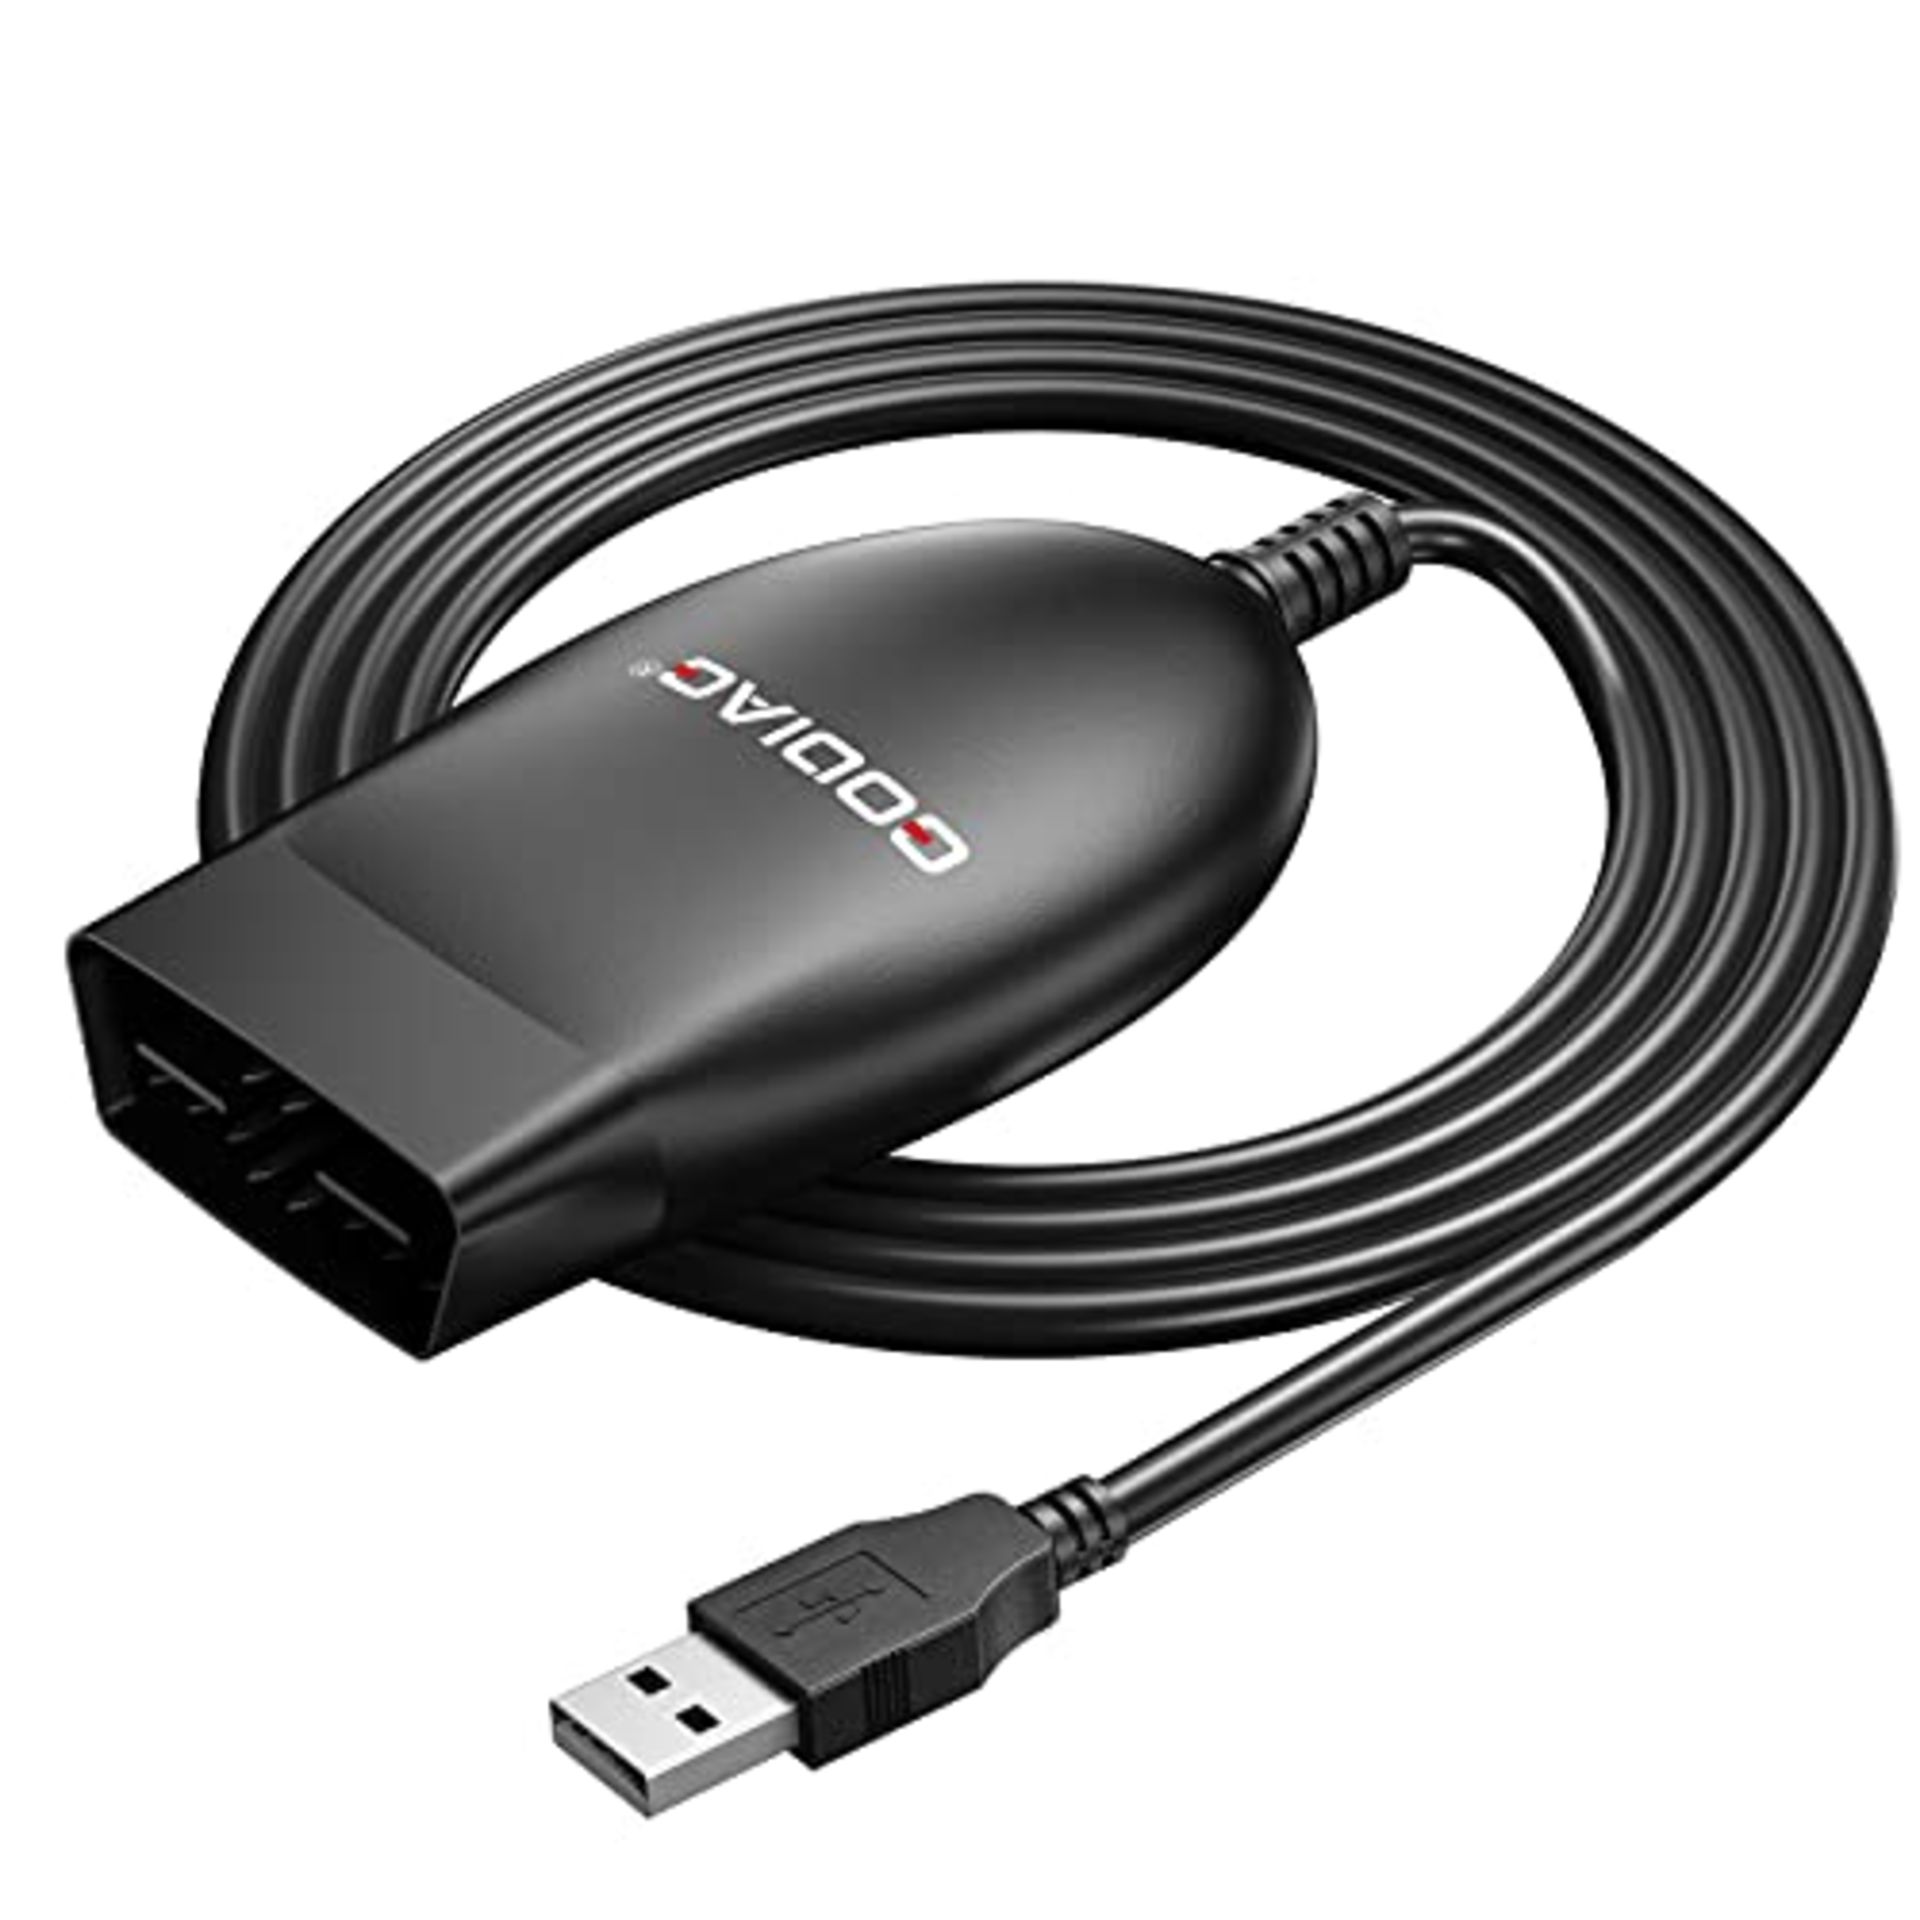 J2534 Openport 2.0 Cable, GODIAG OBD2 USB Adapter ECU Diagnostic Tool, Flash Chip Tunn - Image 5 of 8